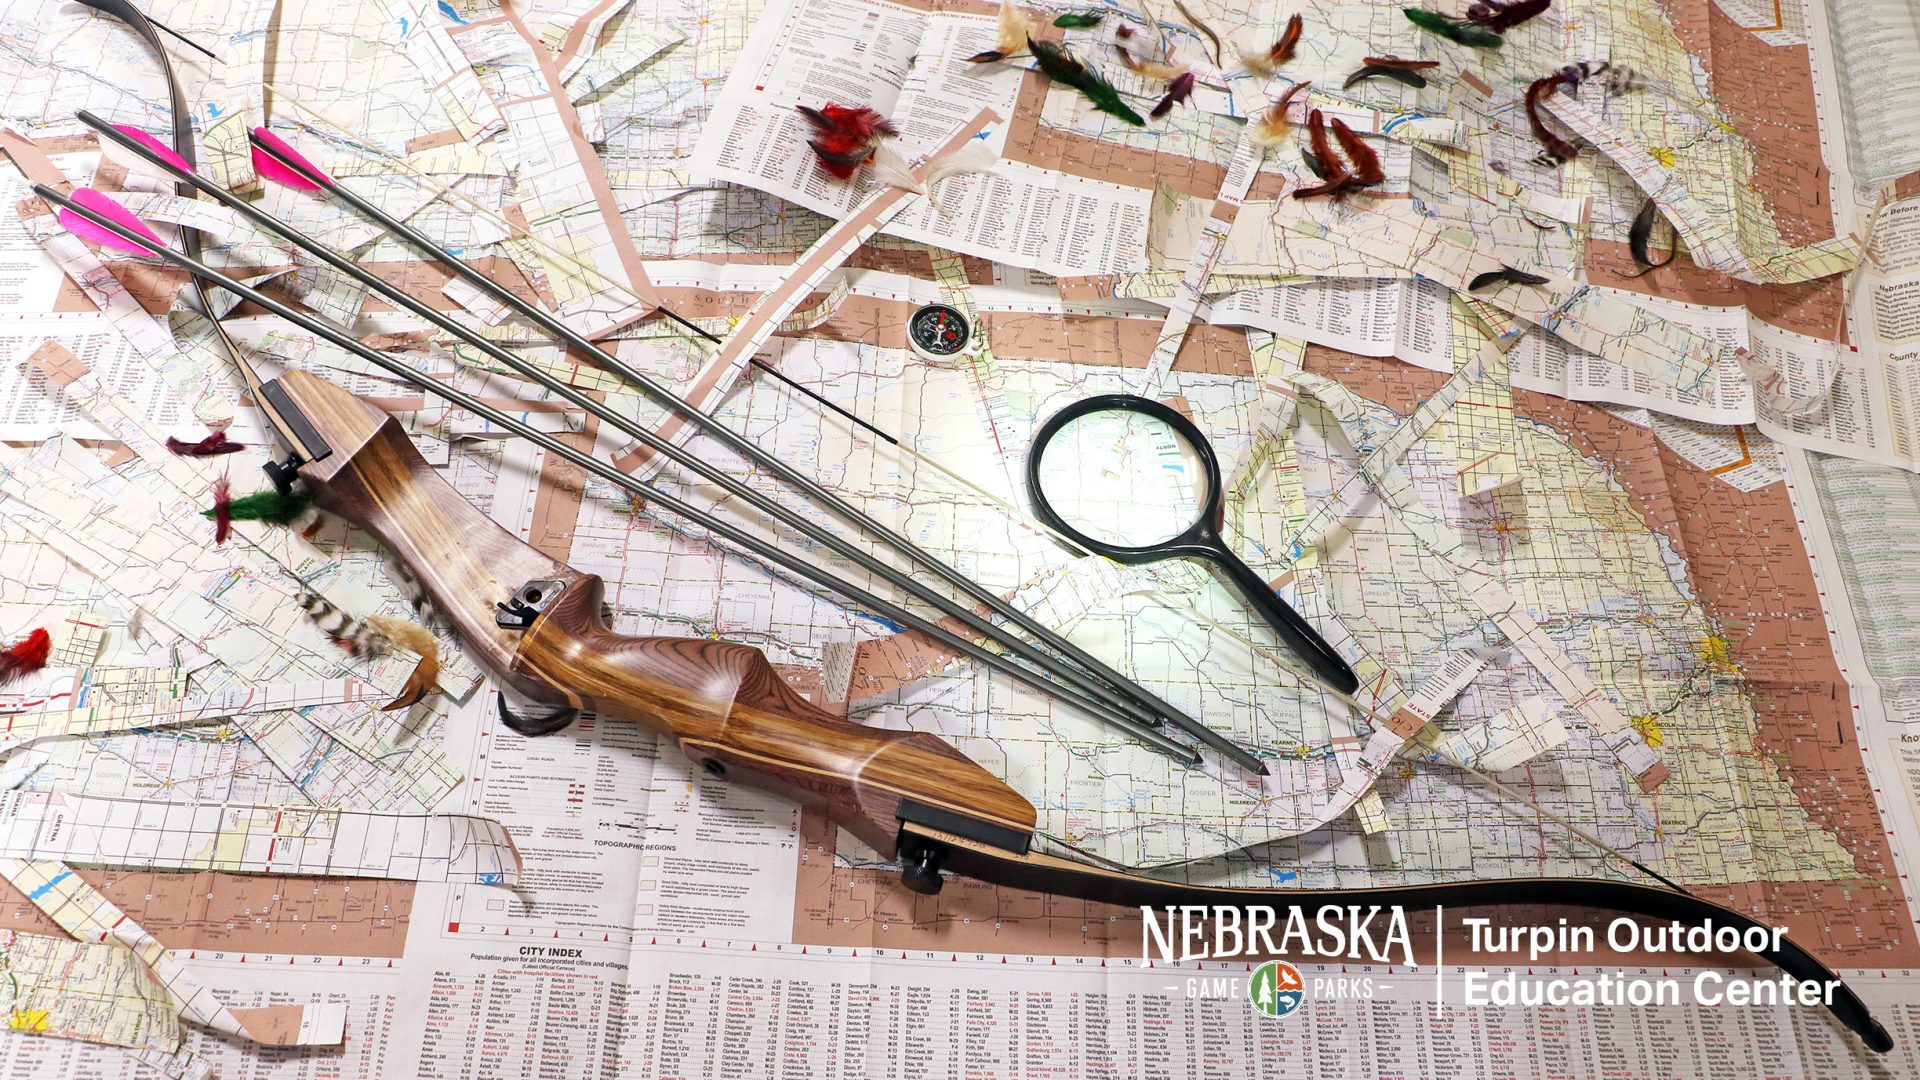 bows and arrows on nebraska map